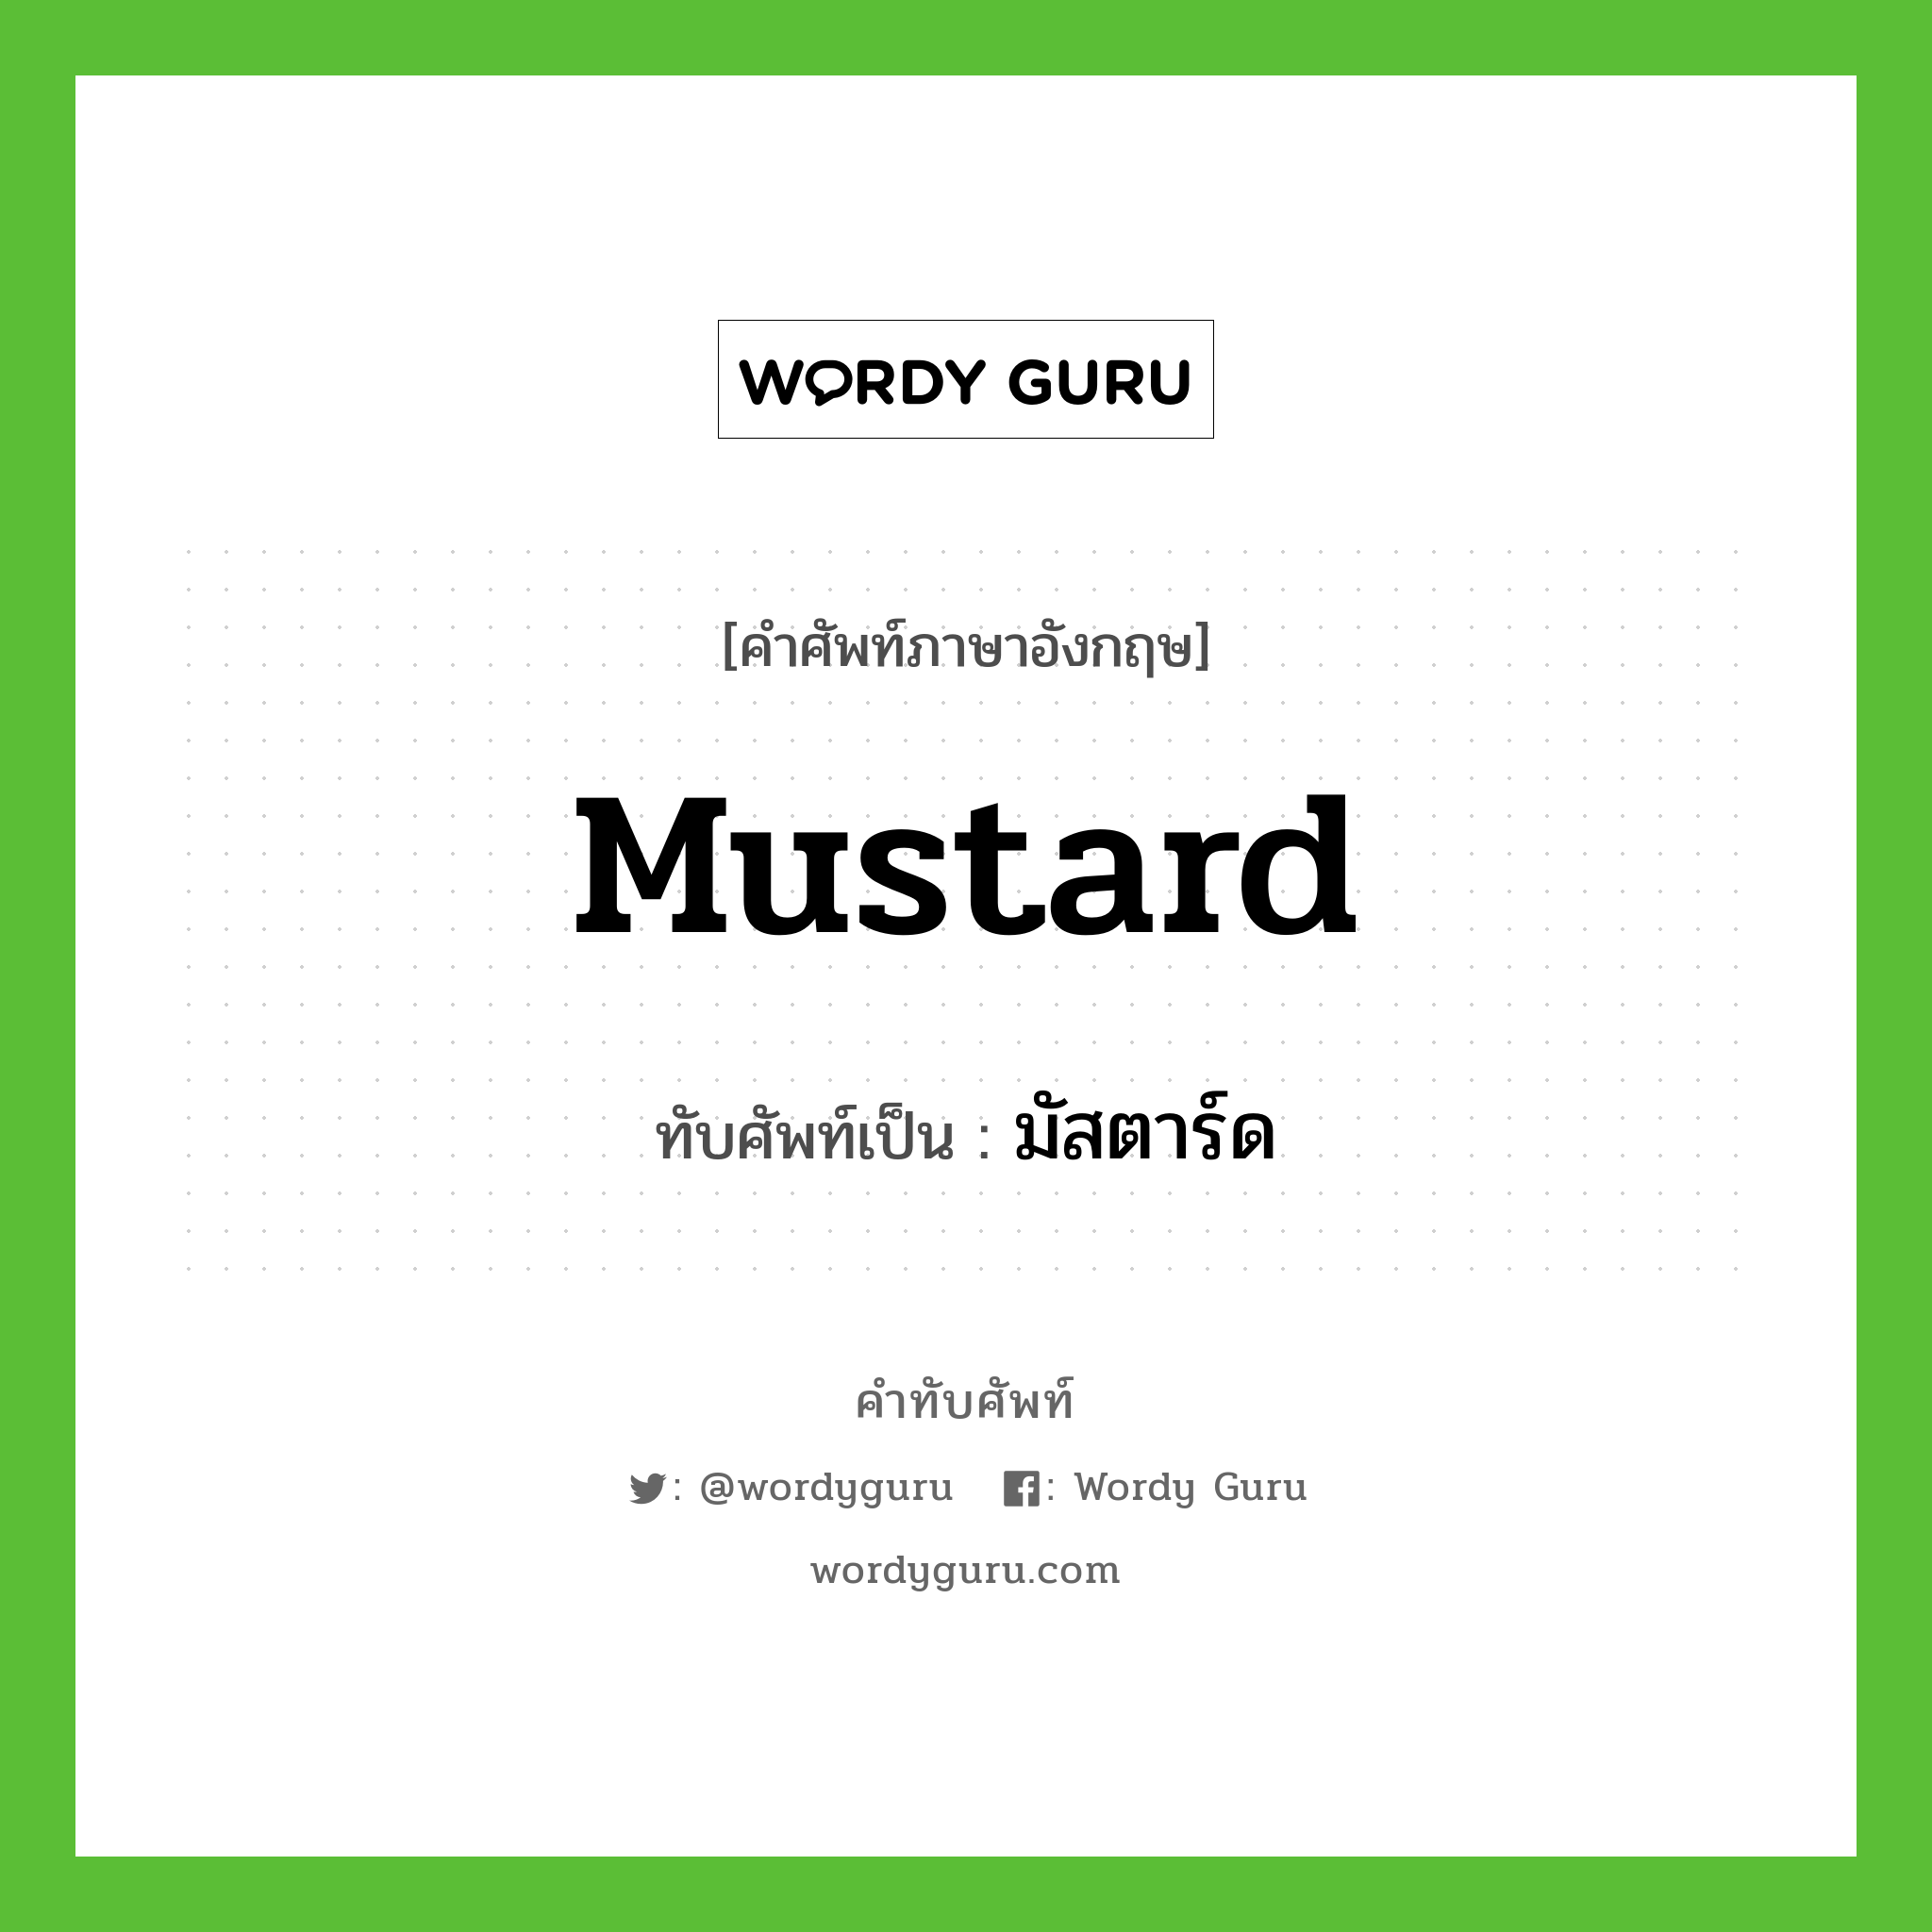 mustard เขียนเป็นคำไทยว่าอะไร?, คำศัพท์ภาษาอังกฤษ mustard ทับศัพท์เป็น มัสตาร์ด